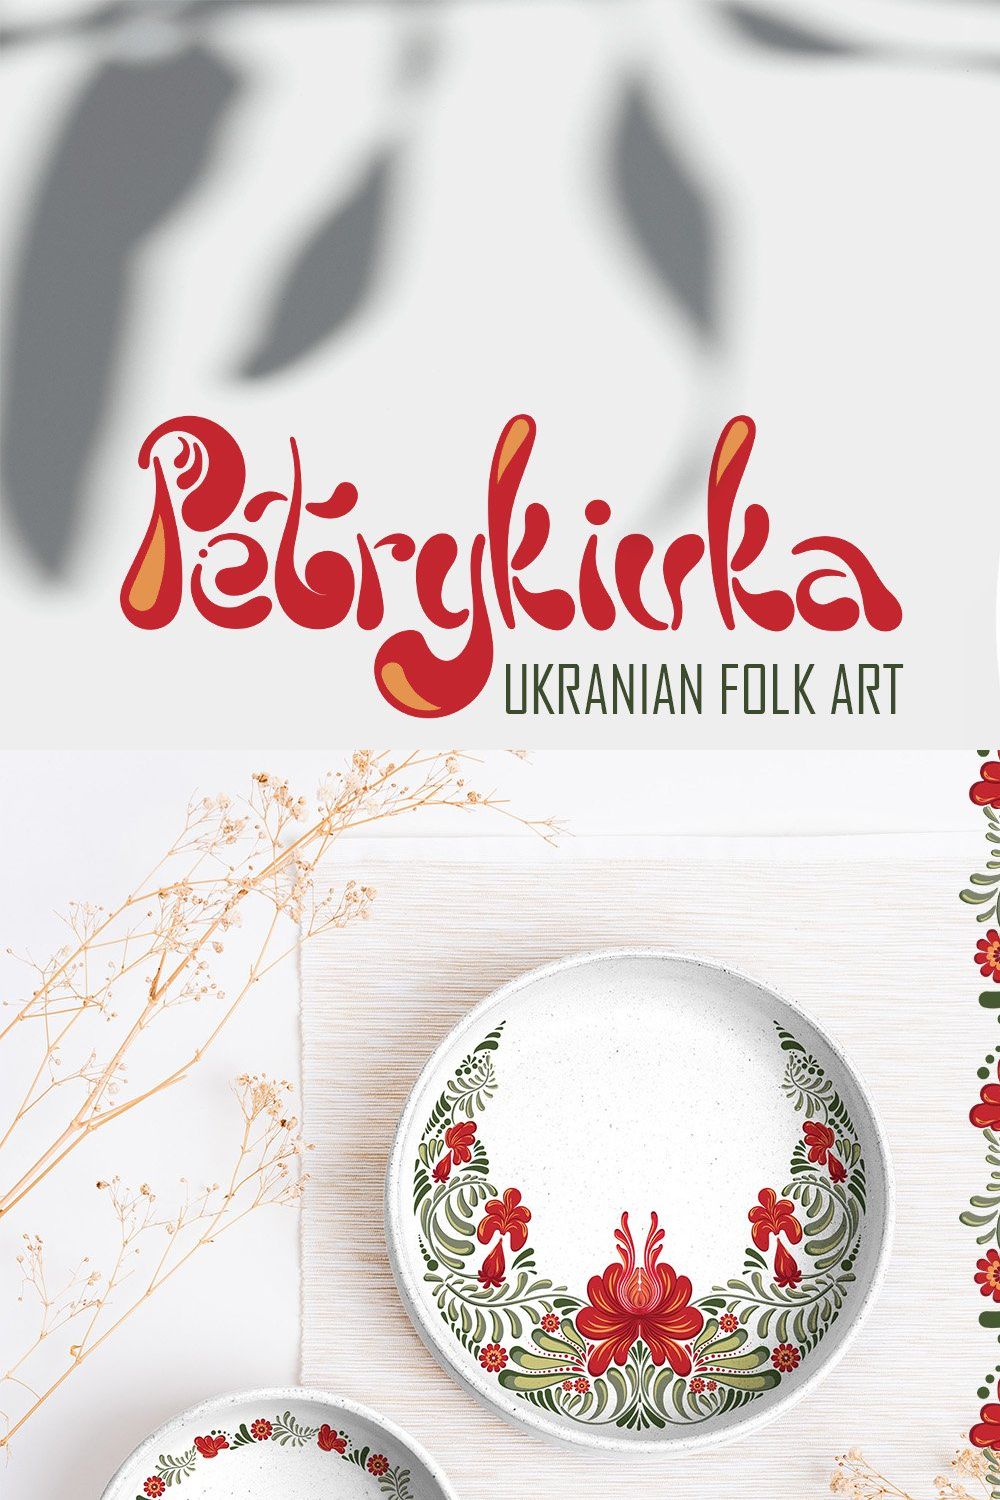 PETRYKIVKA - Ukranian folk art pinterest preview image.